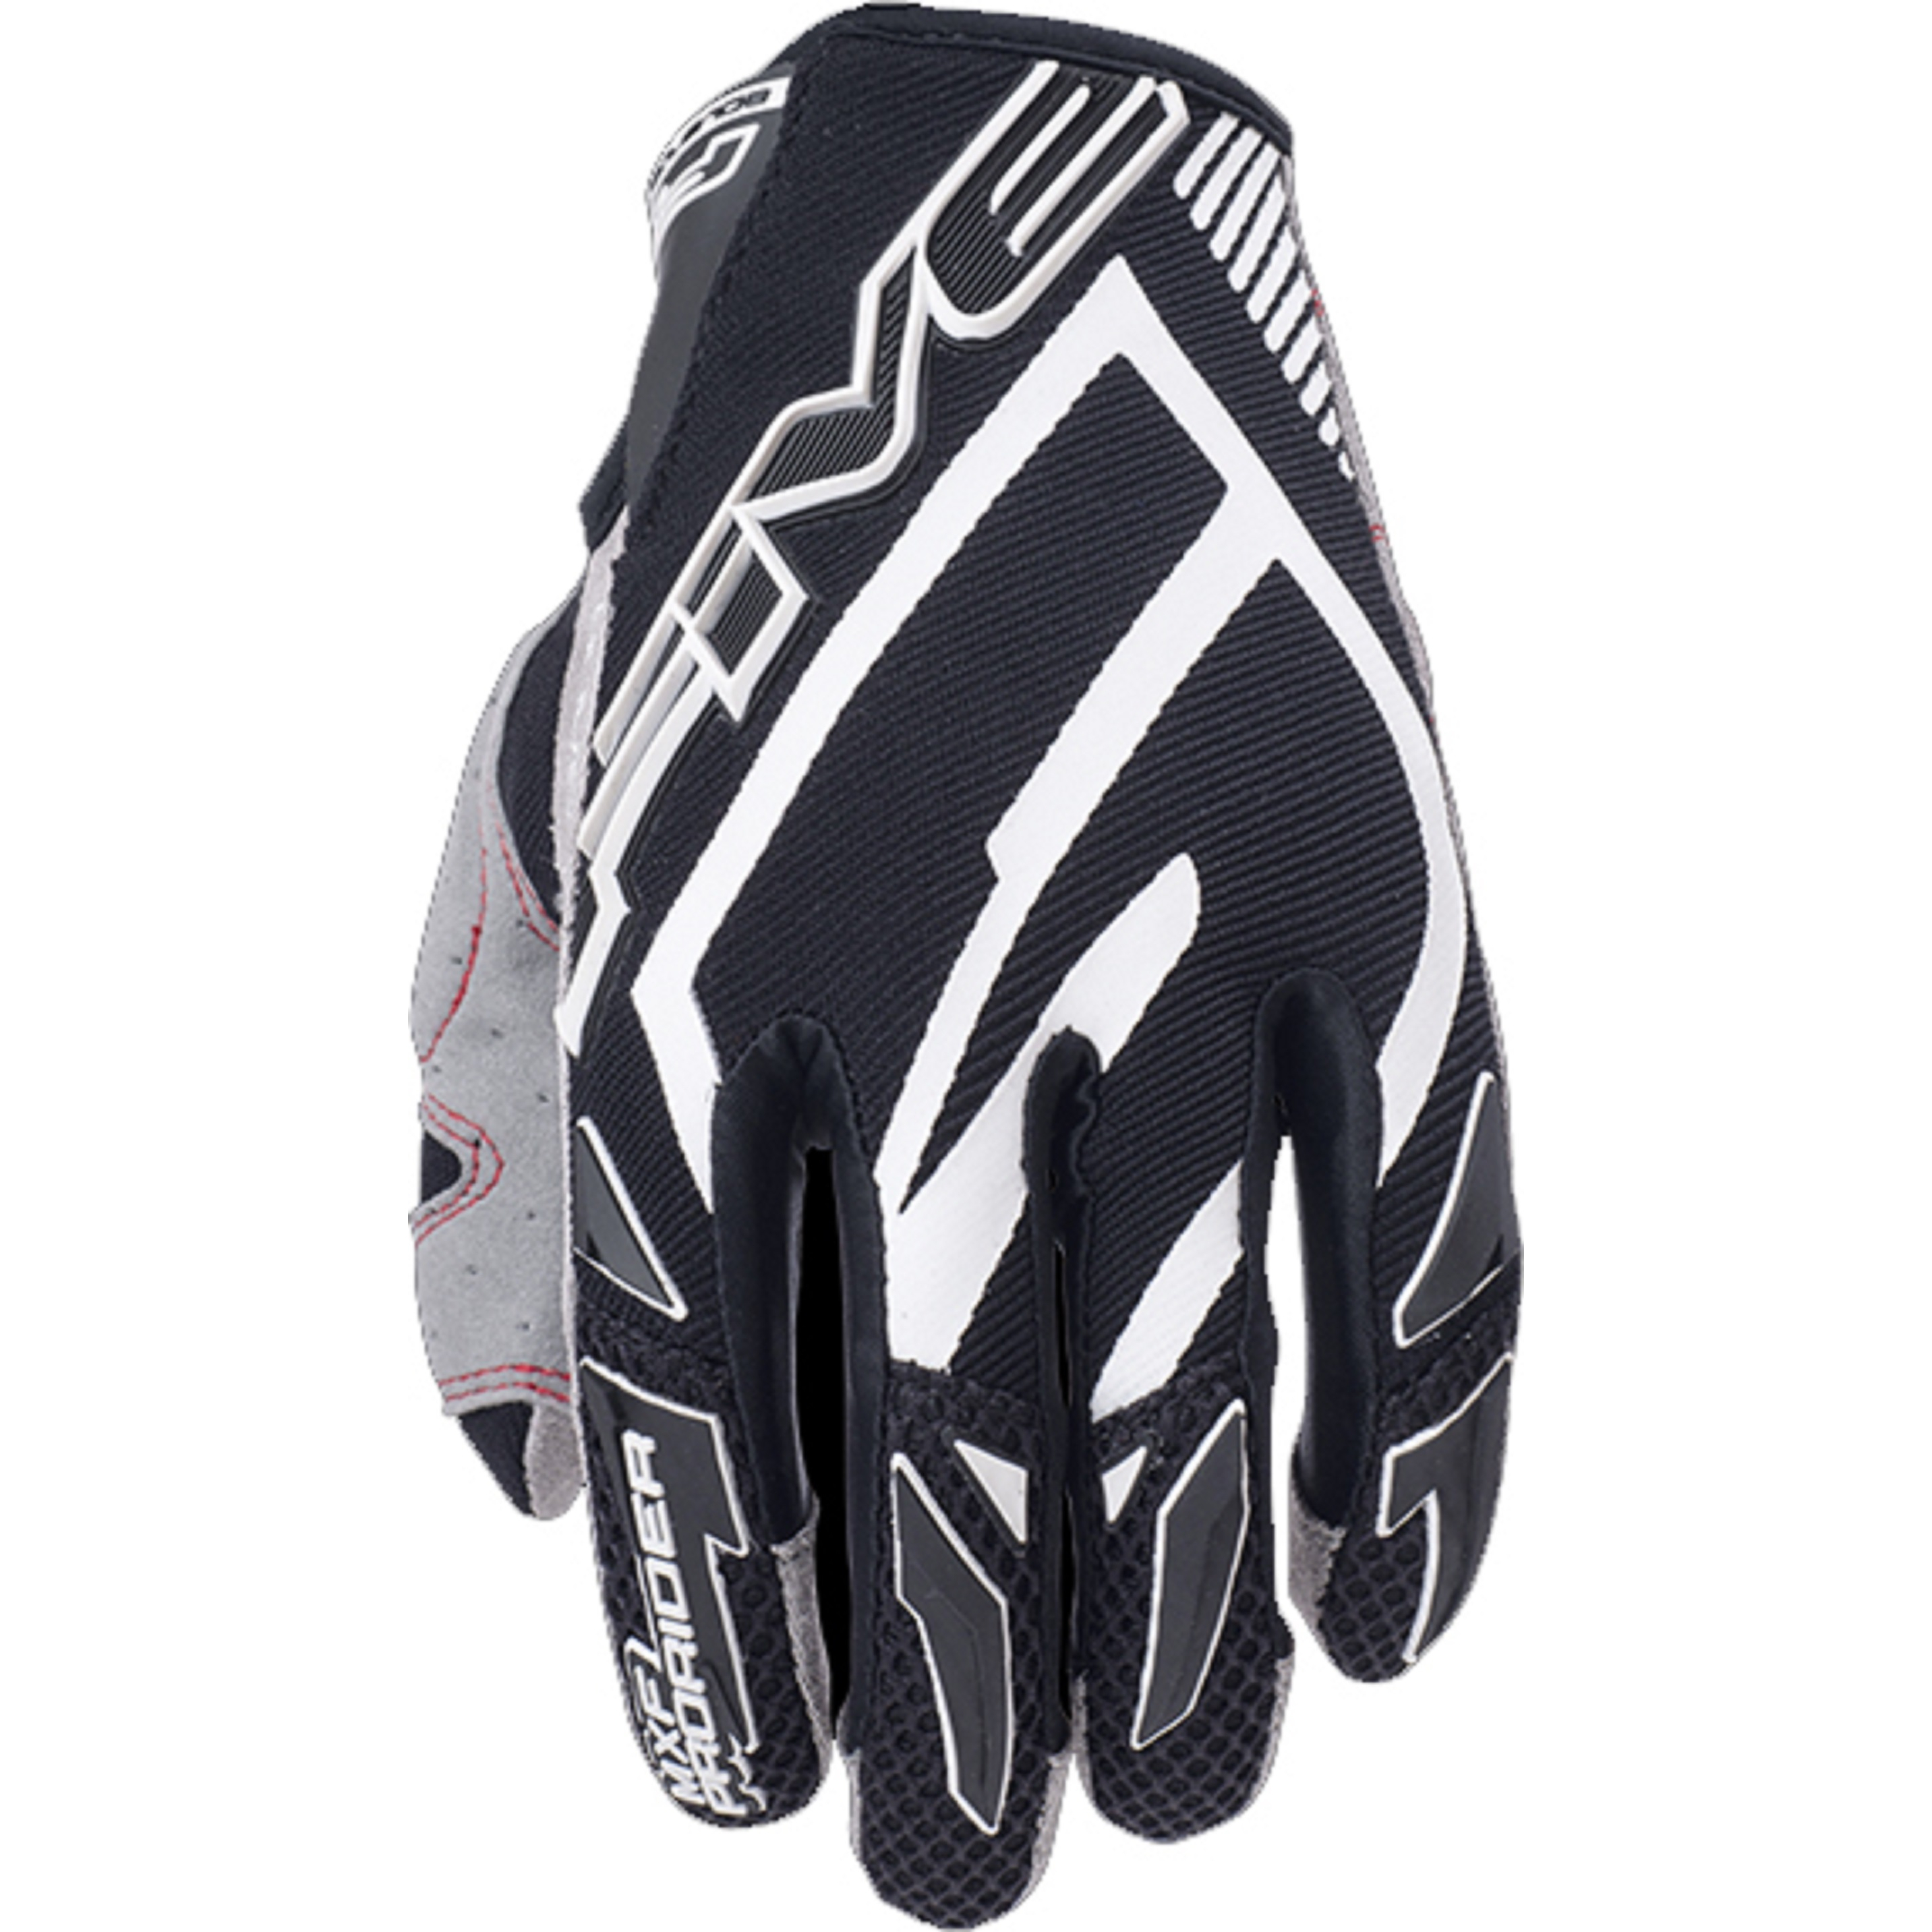 法國FIVE頂級全指手套 Five advanced gloves MXF PRORIDER 黑色